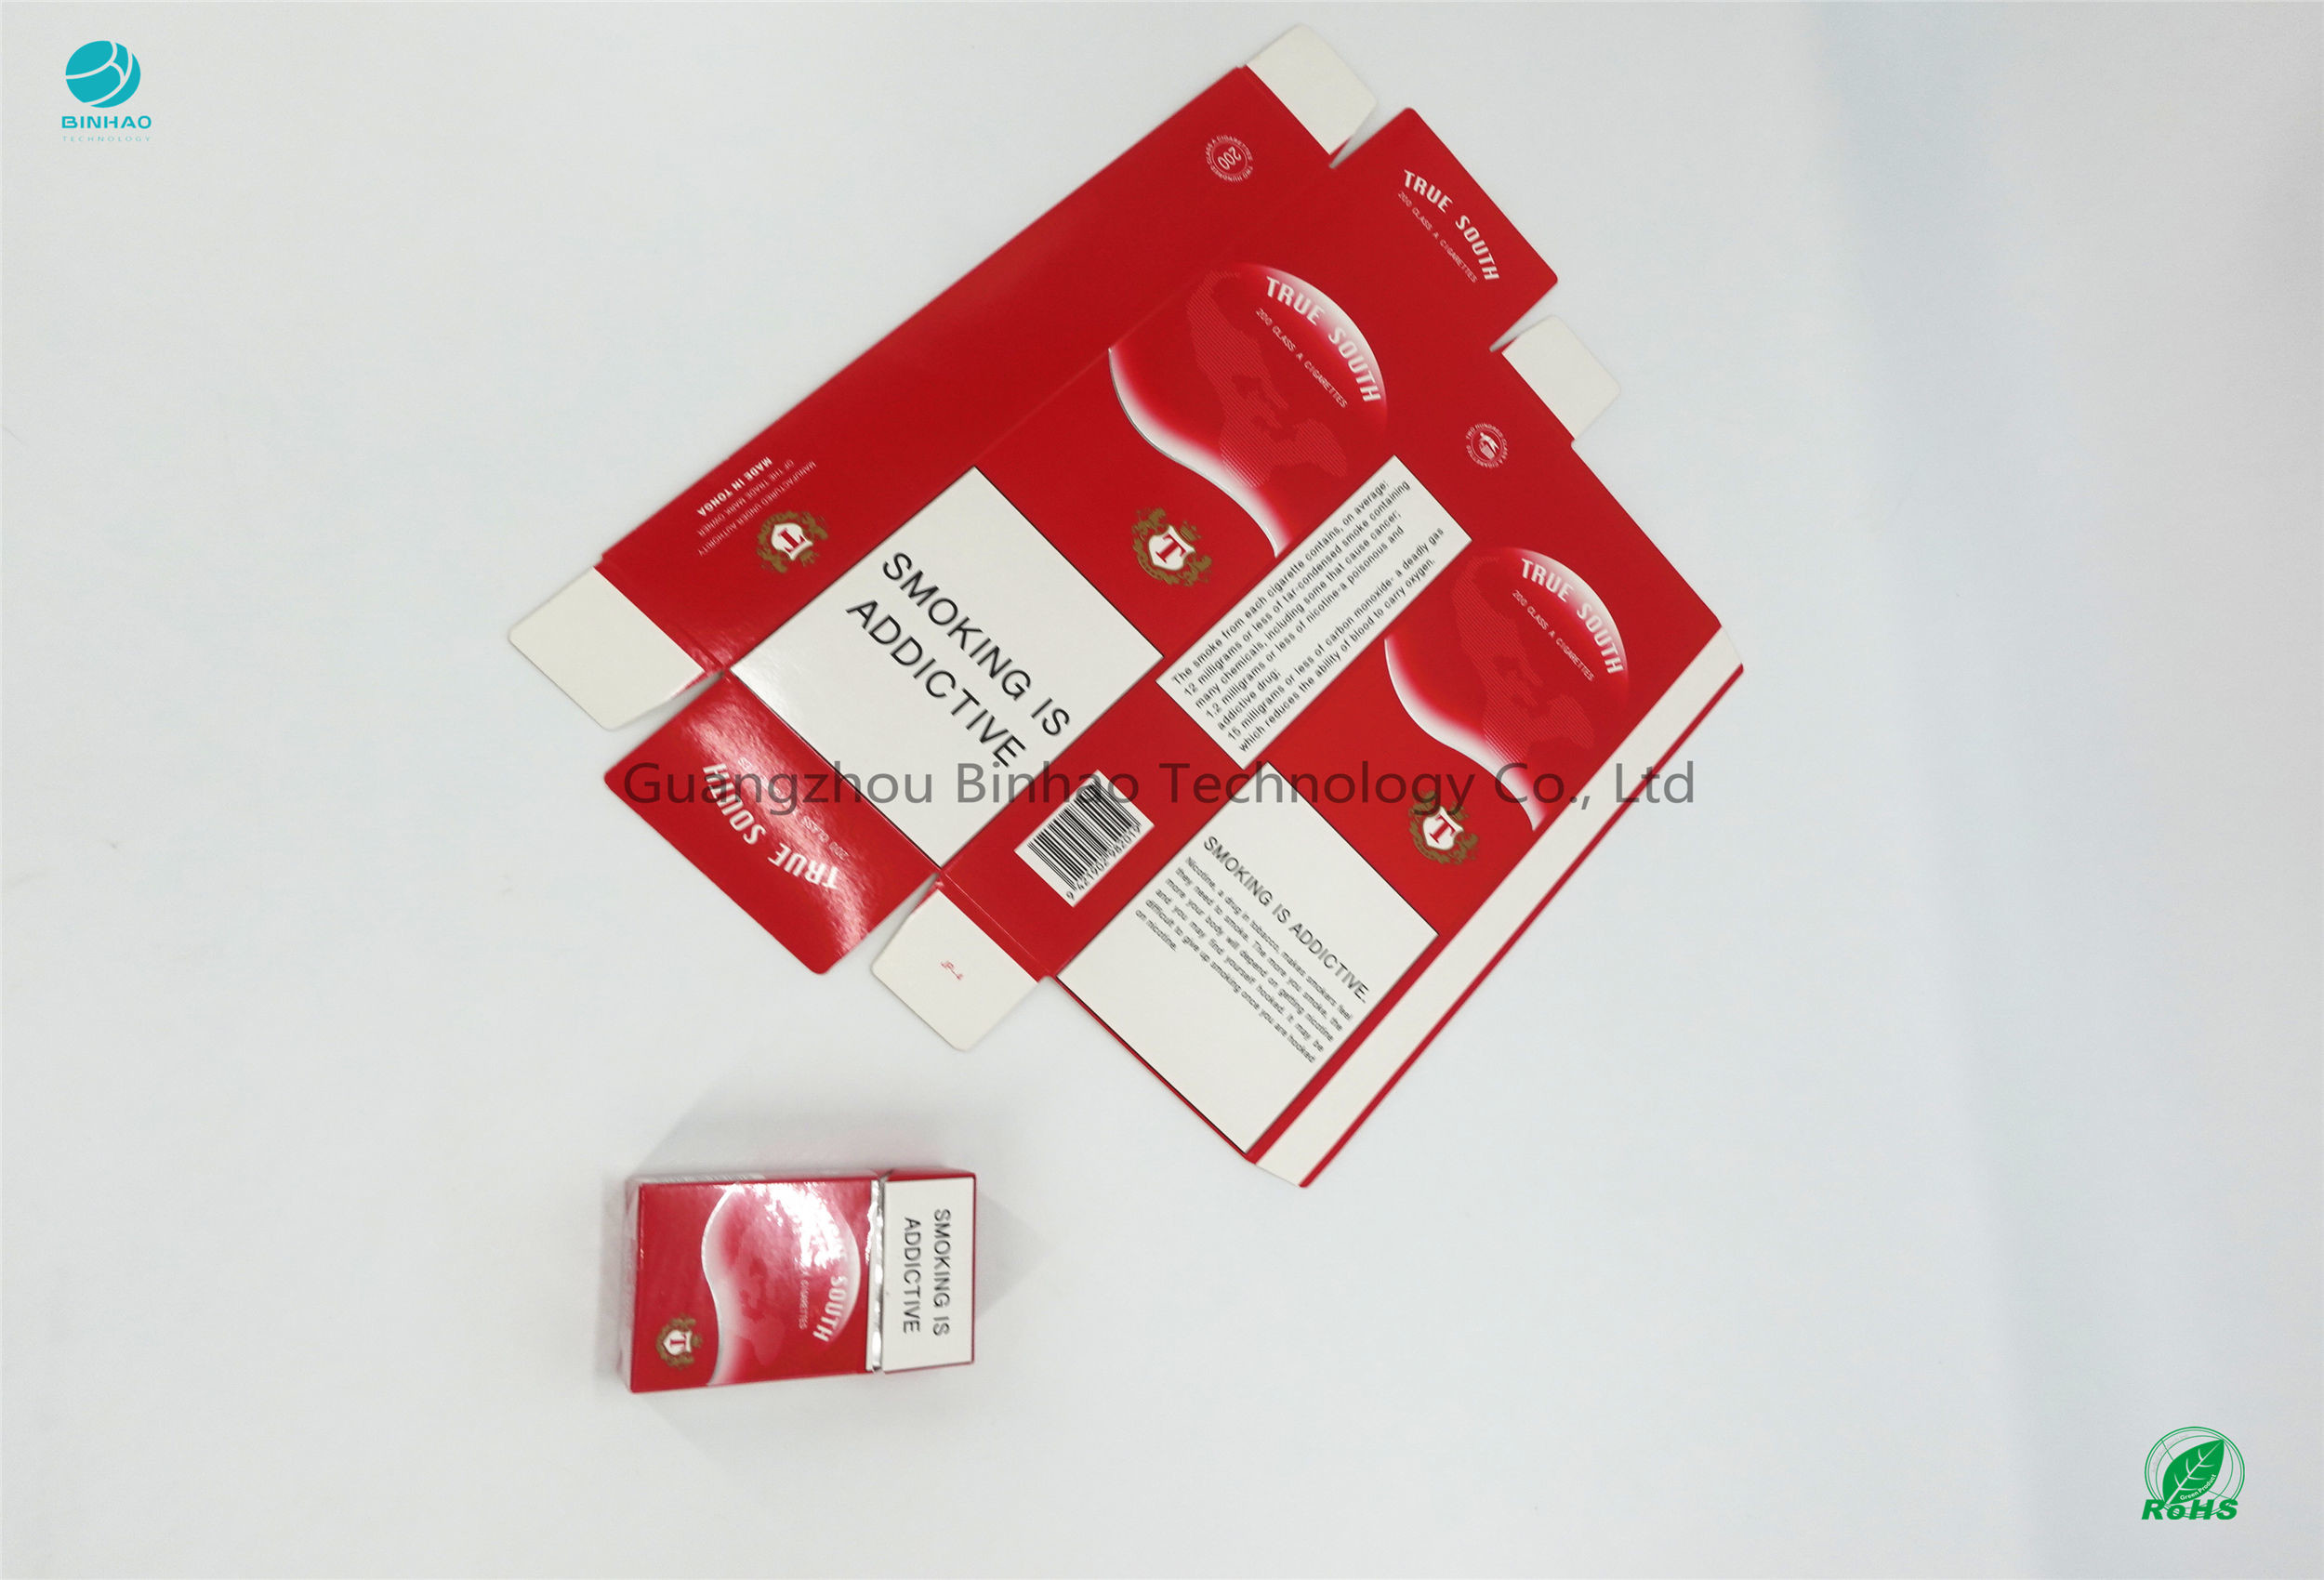 Cigarette Cases High Stiffness 89% Good Printability Cardboard Long Box